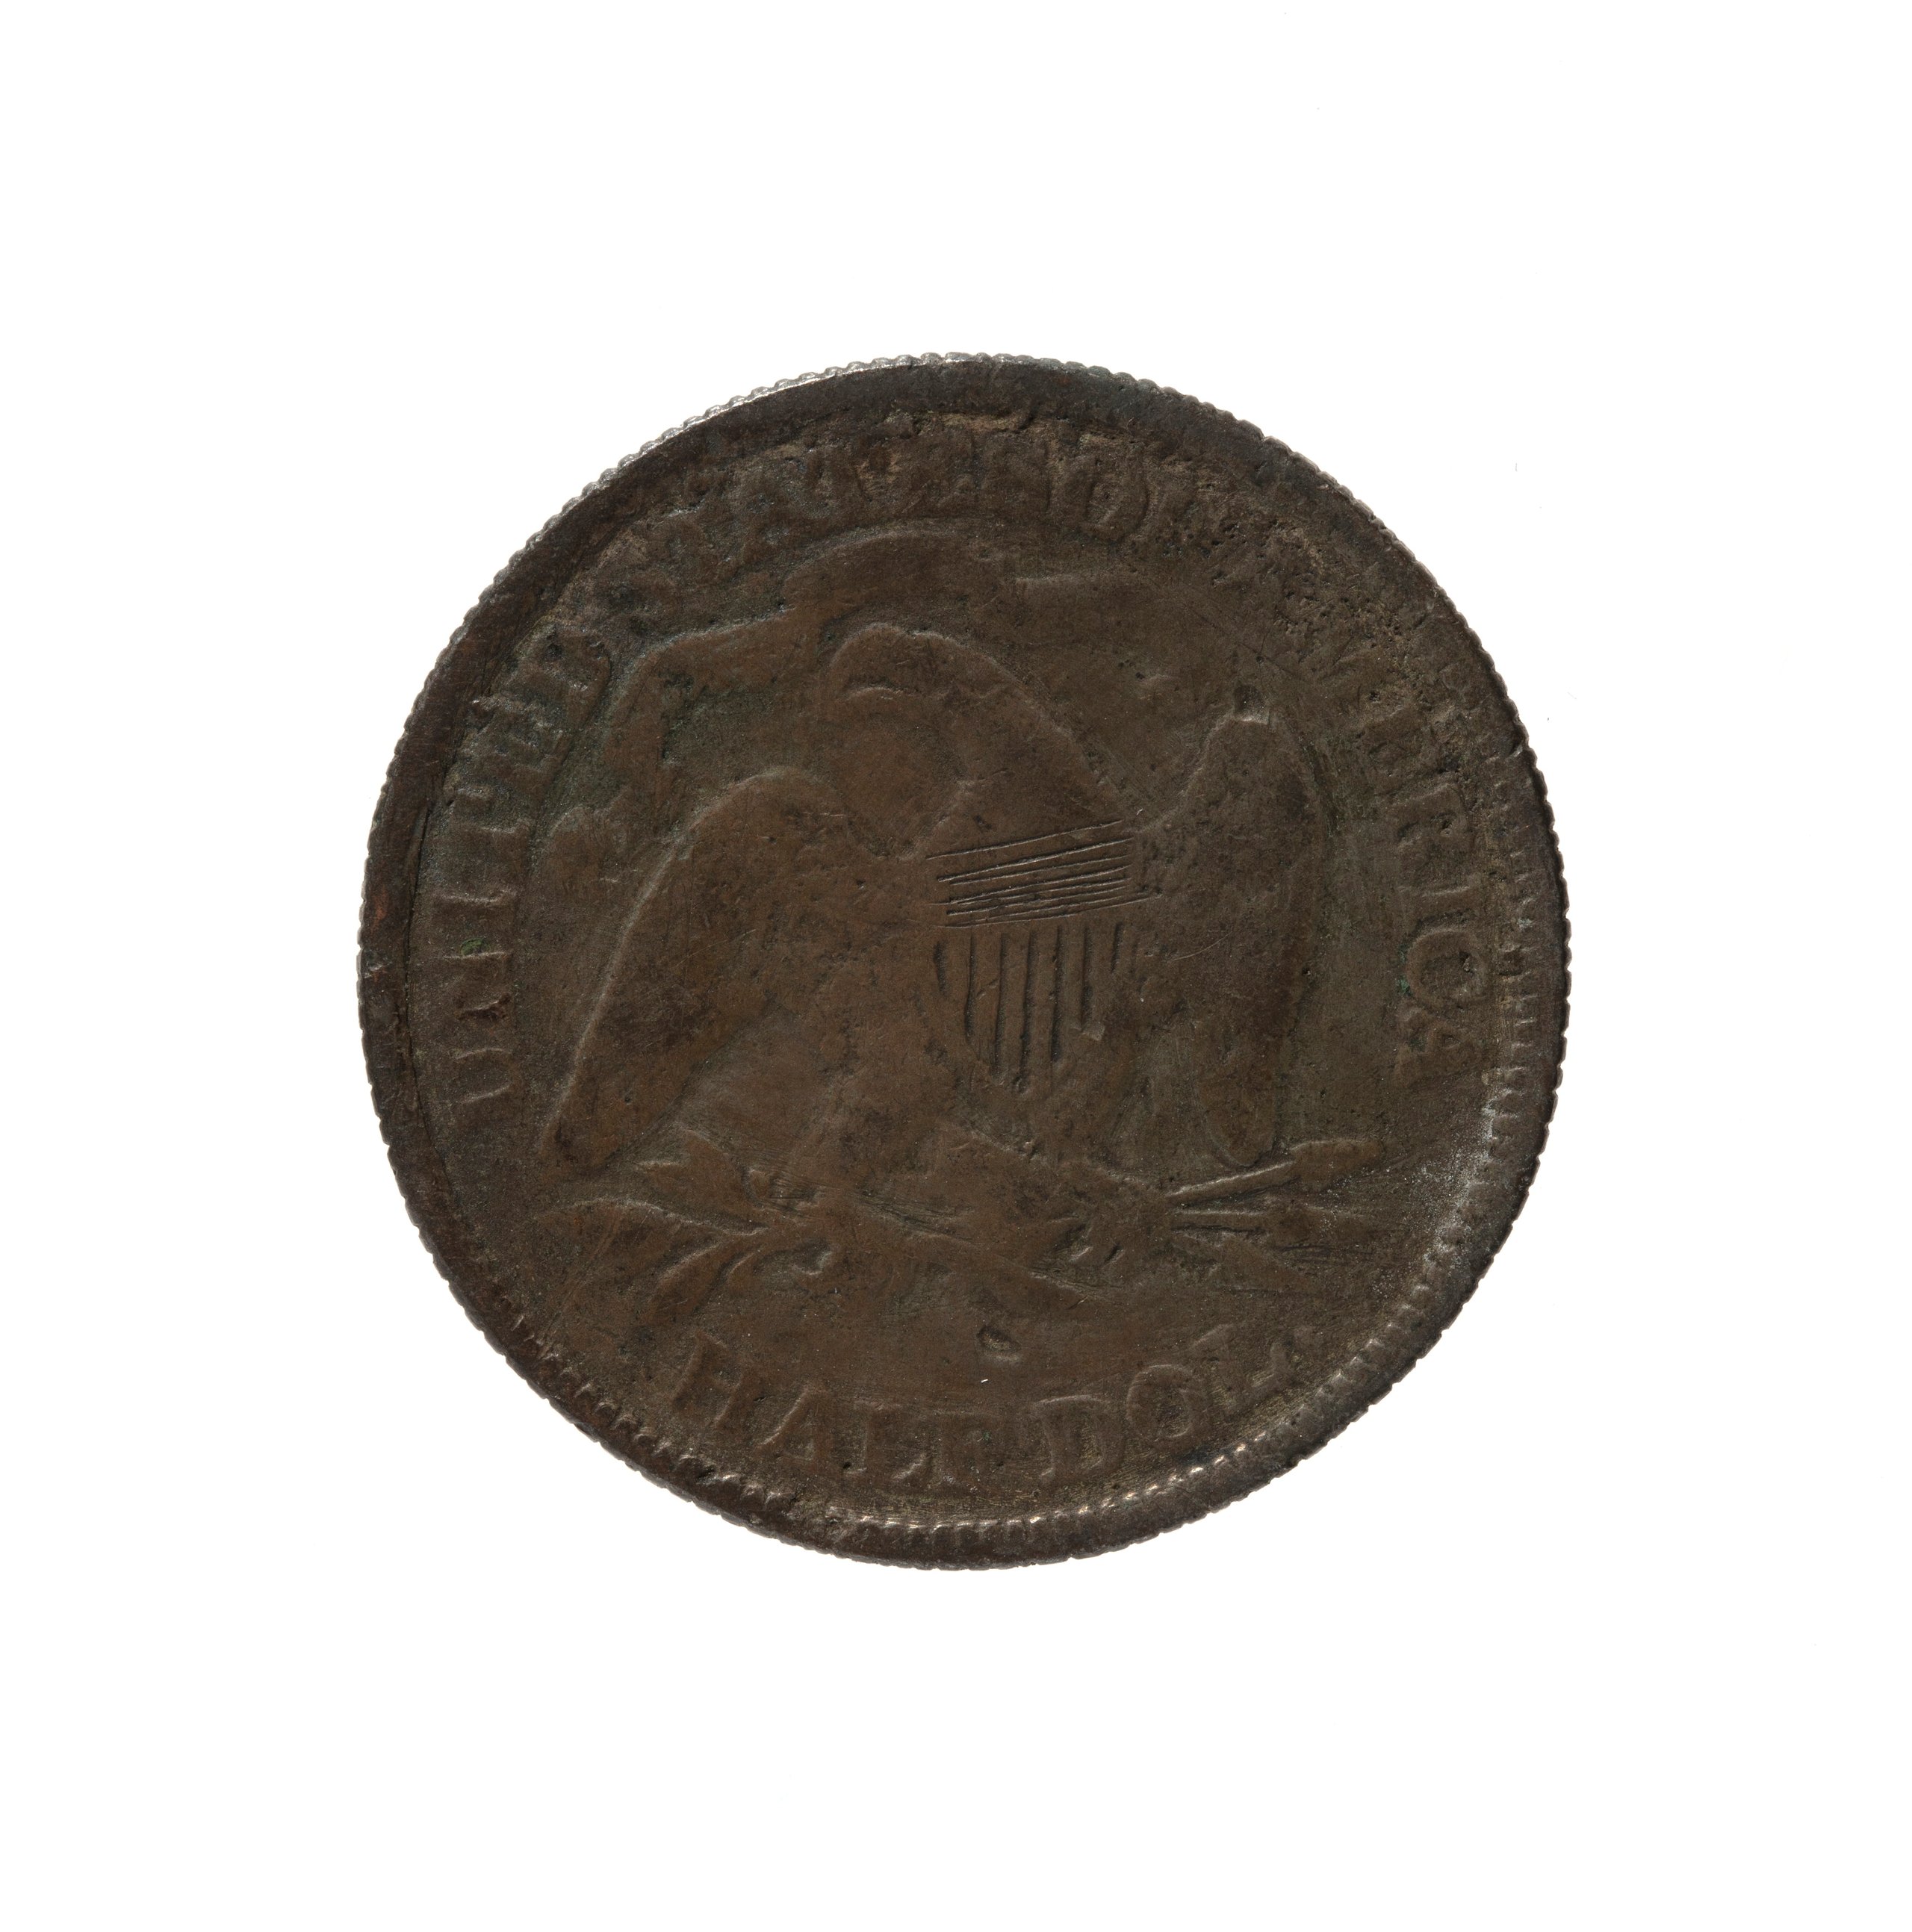 Counterfeit American Half Dollar coin